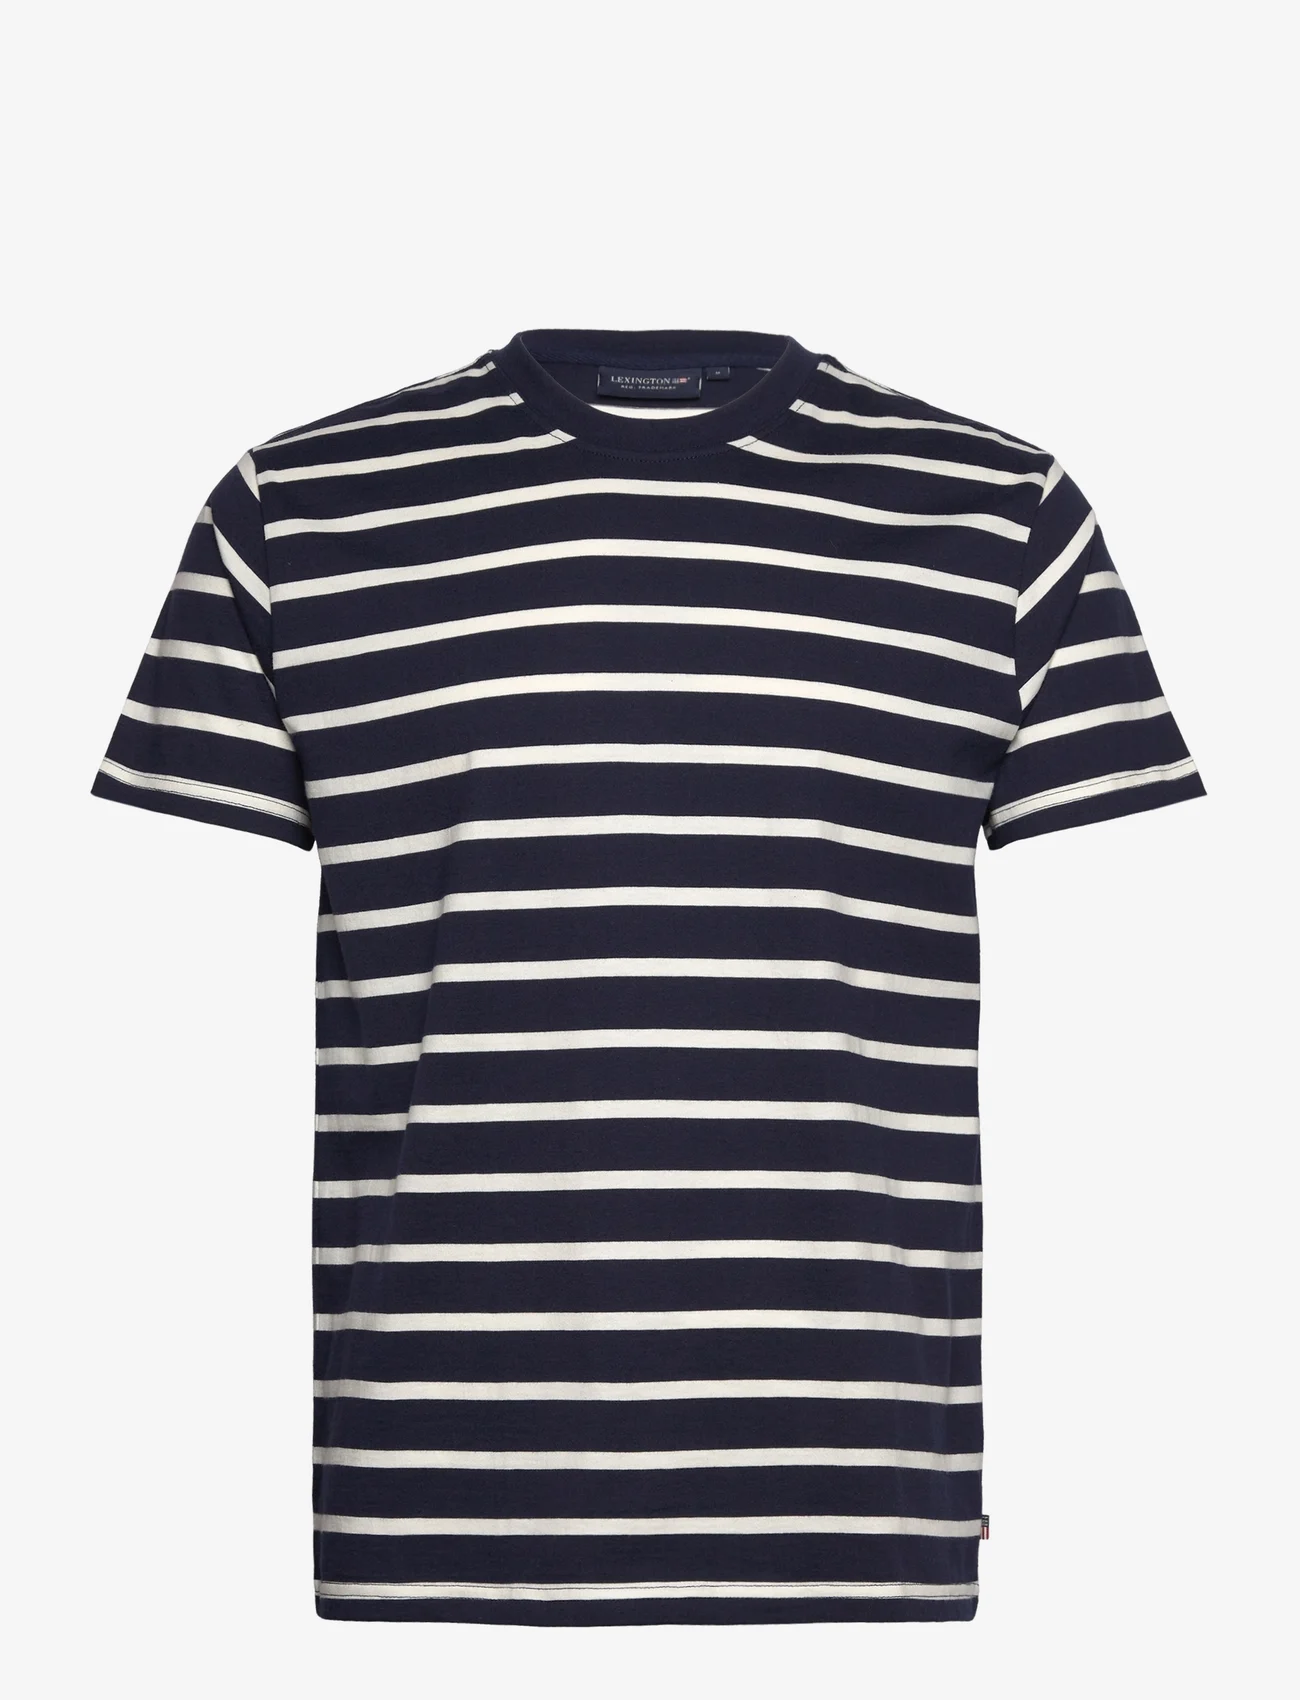 Lexington Clothing - Ricky Striped Tee - dark blue/beige stripe - 0